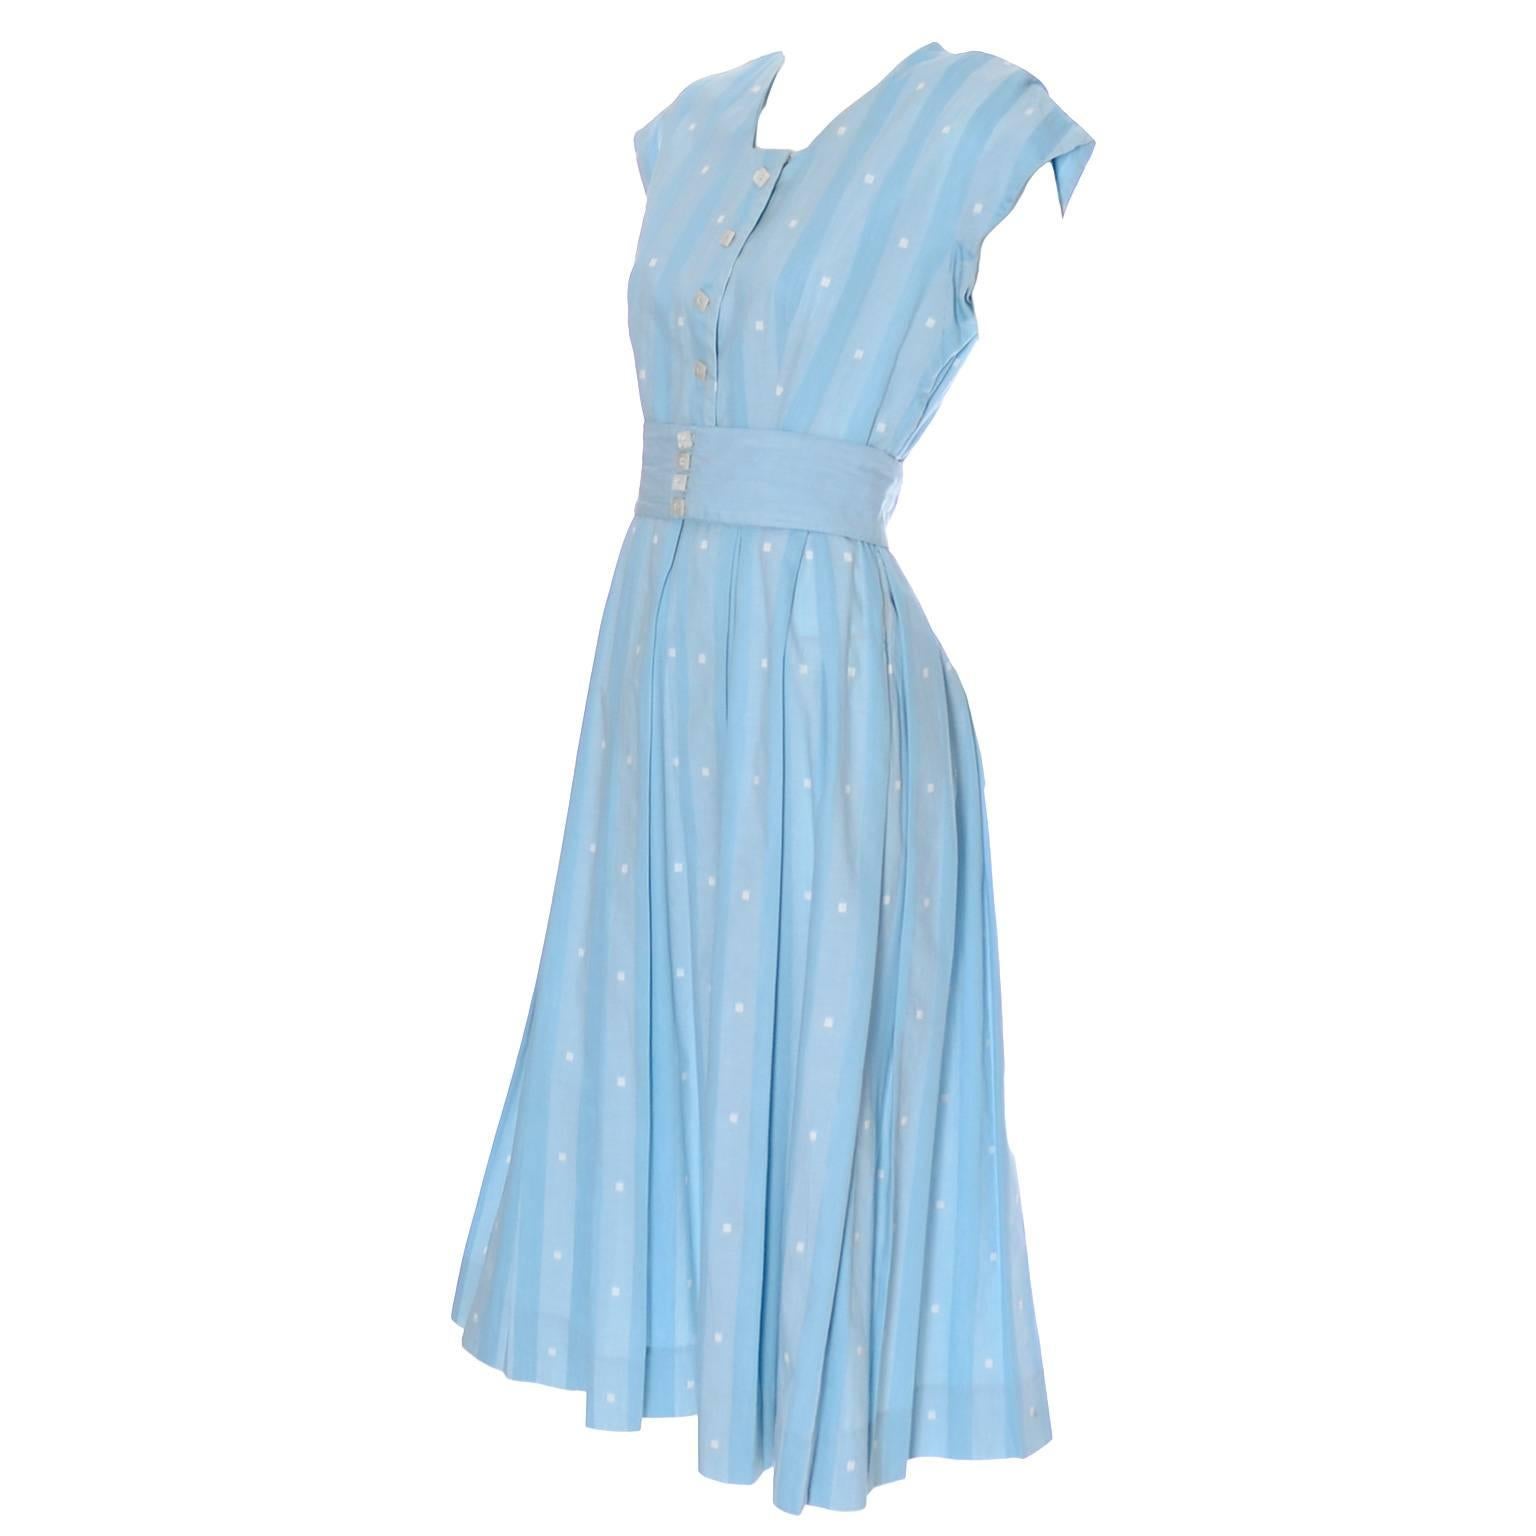 1950s Original Vintage Dress Worn By Jessica Chastain Tree of Life Movie Costume